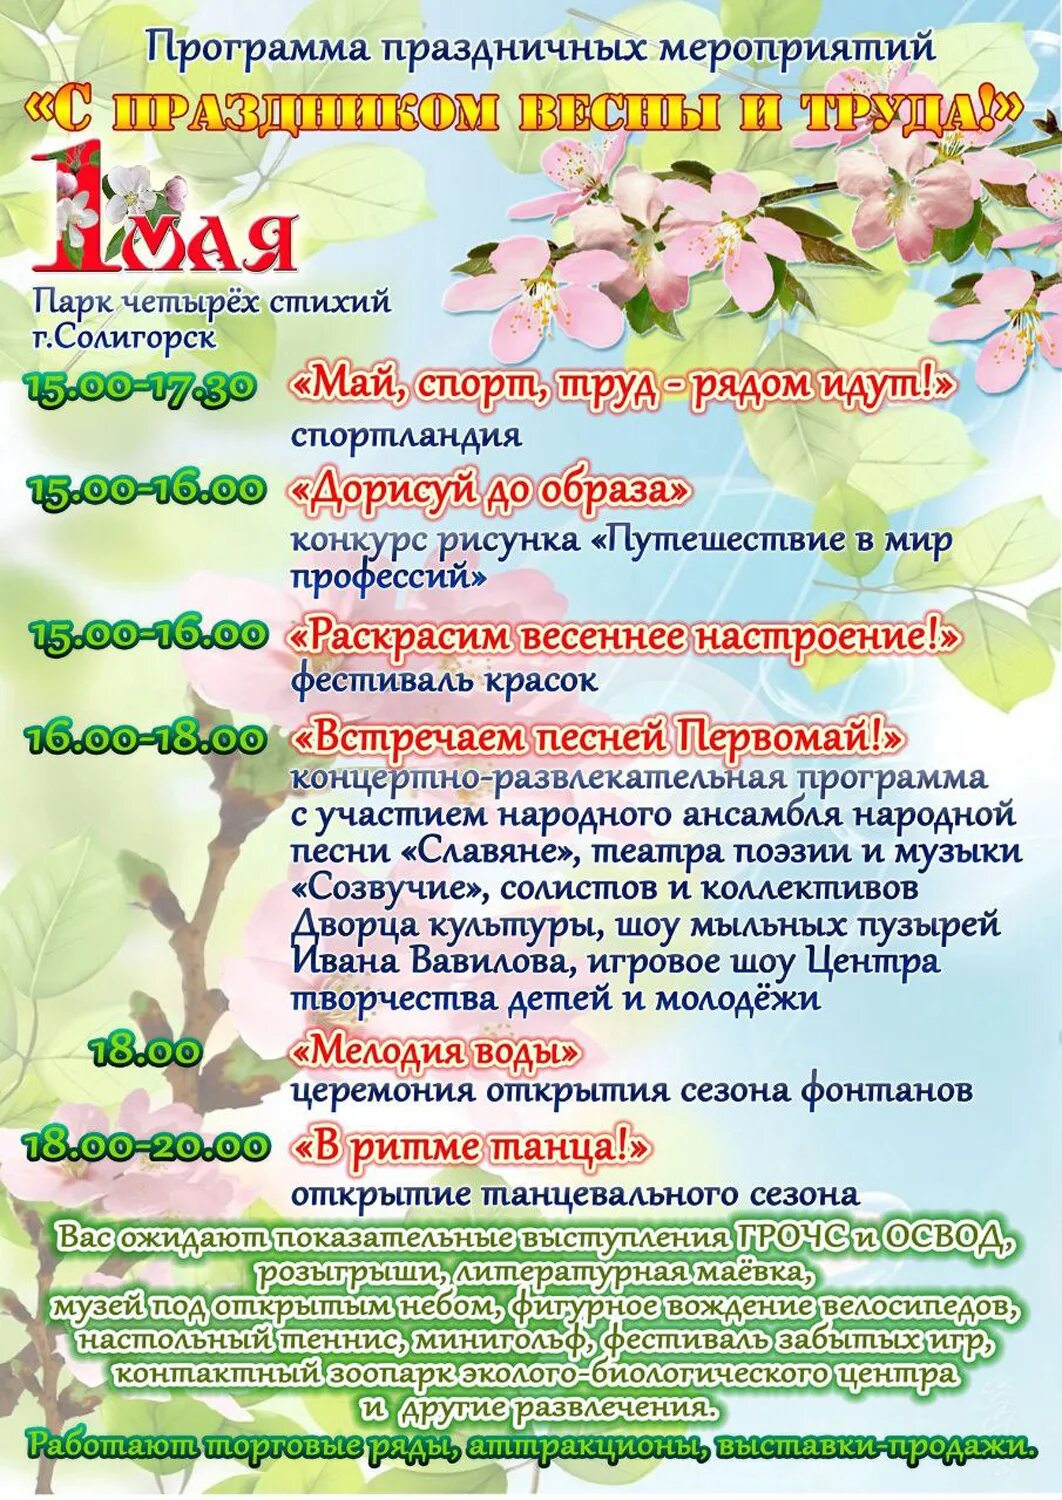 1 мая праздник в беларуси. 1 Мая афиша мероприятий. Плакат мероприятия. Афиша мероприятий на май в парке. План мероприятий на Первомай.